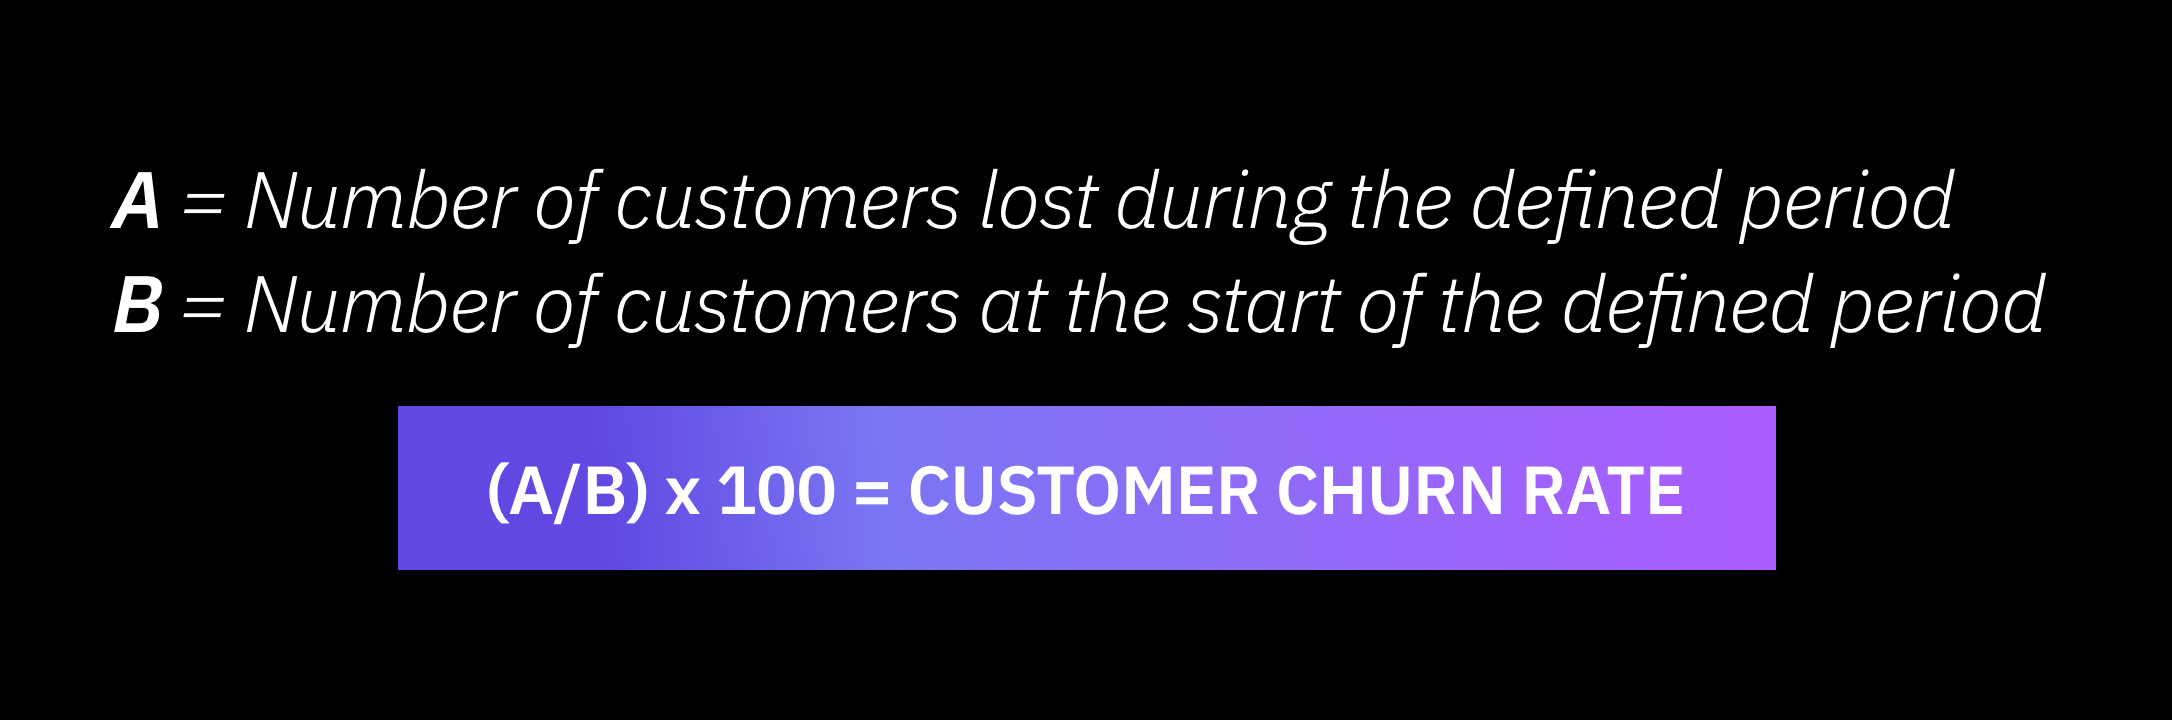 Customer churn rate calculation 